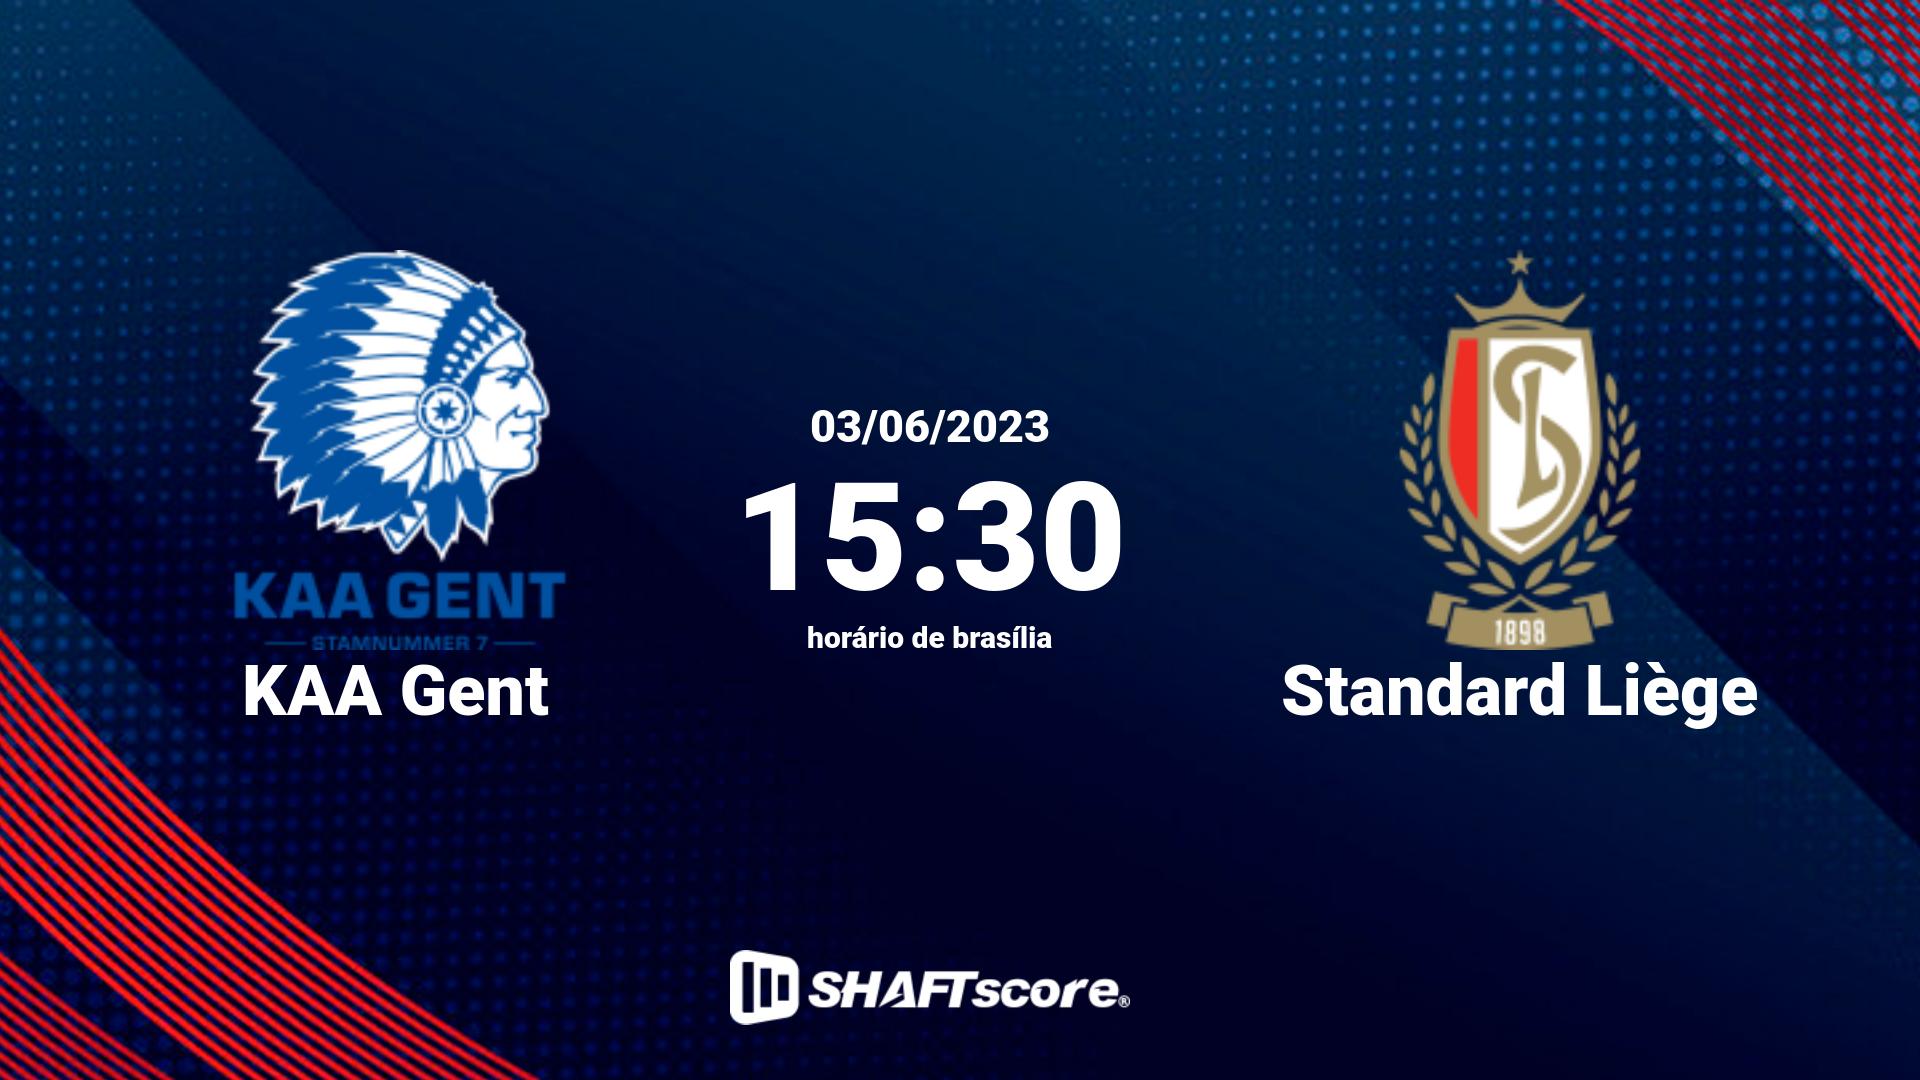 Estatísticas do jogo KAA Gent vs Standard Liège 03.06 15:30